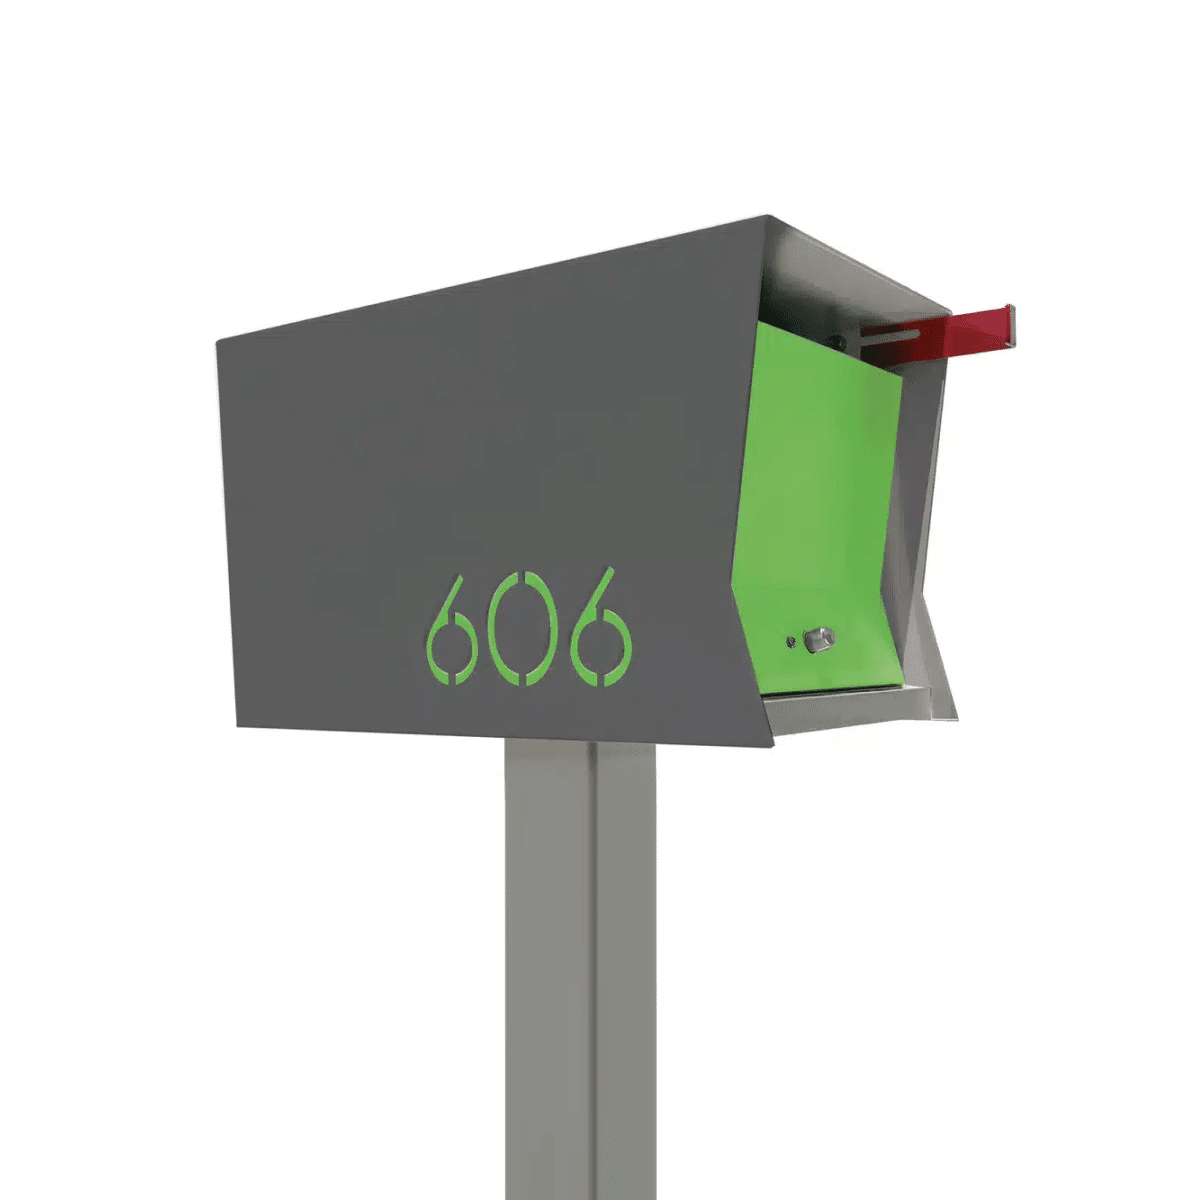 The Original Retrobox in Designer Gray – Modern Mailbox